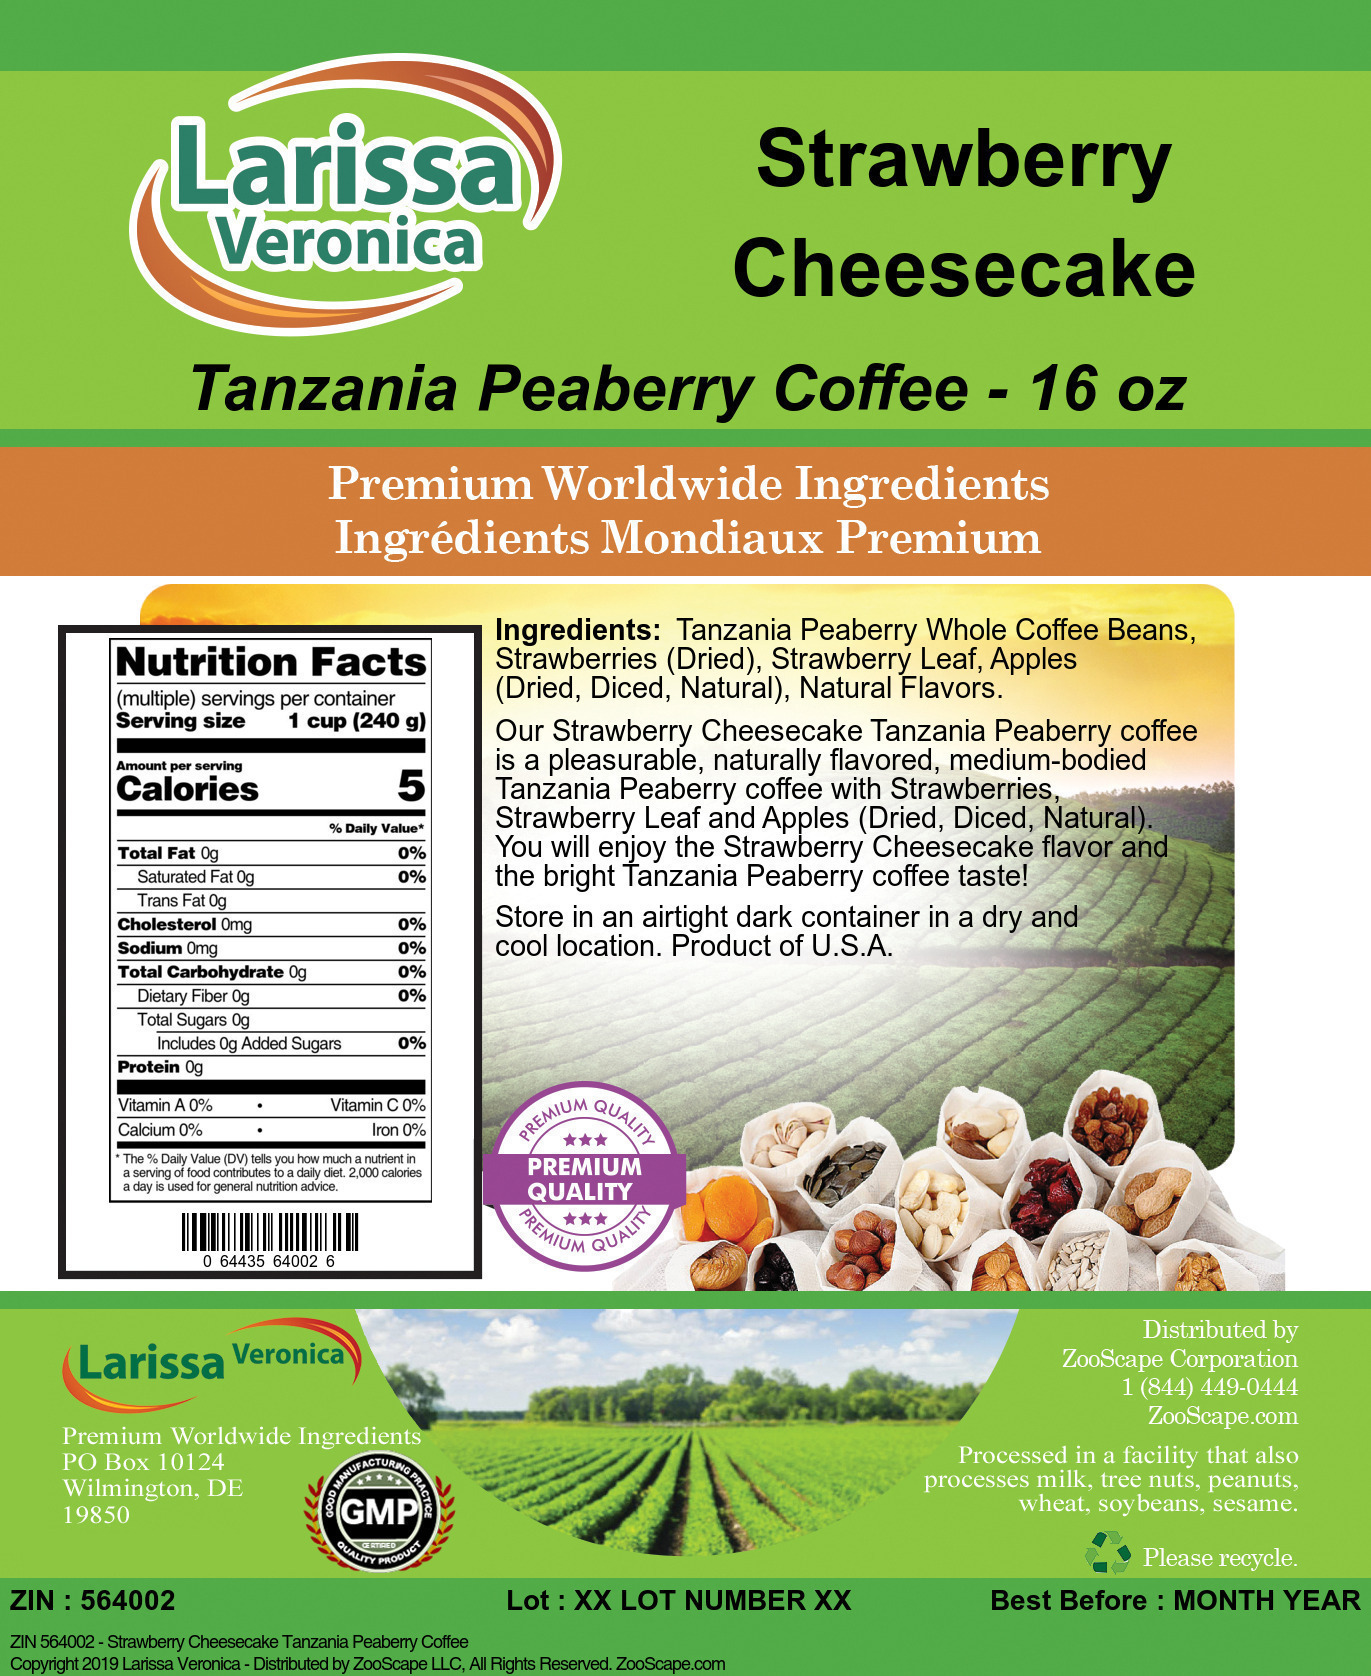 Strawberry Cheesecake Tanzania Peaberry Coffee - Label